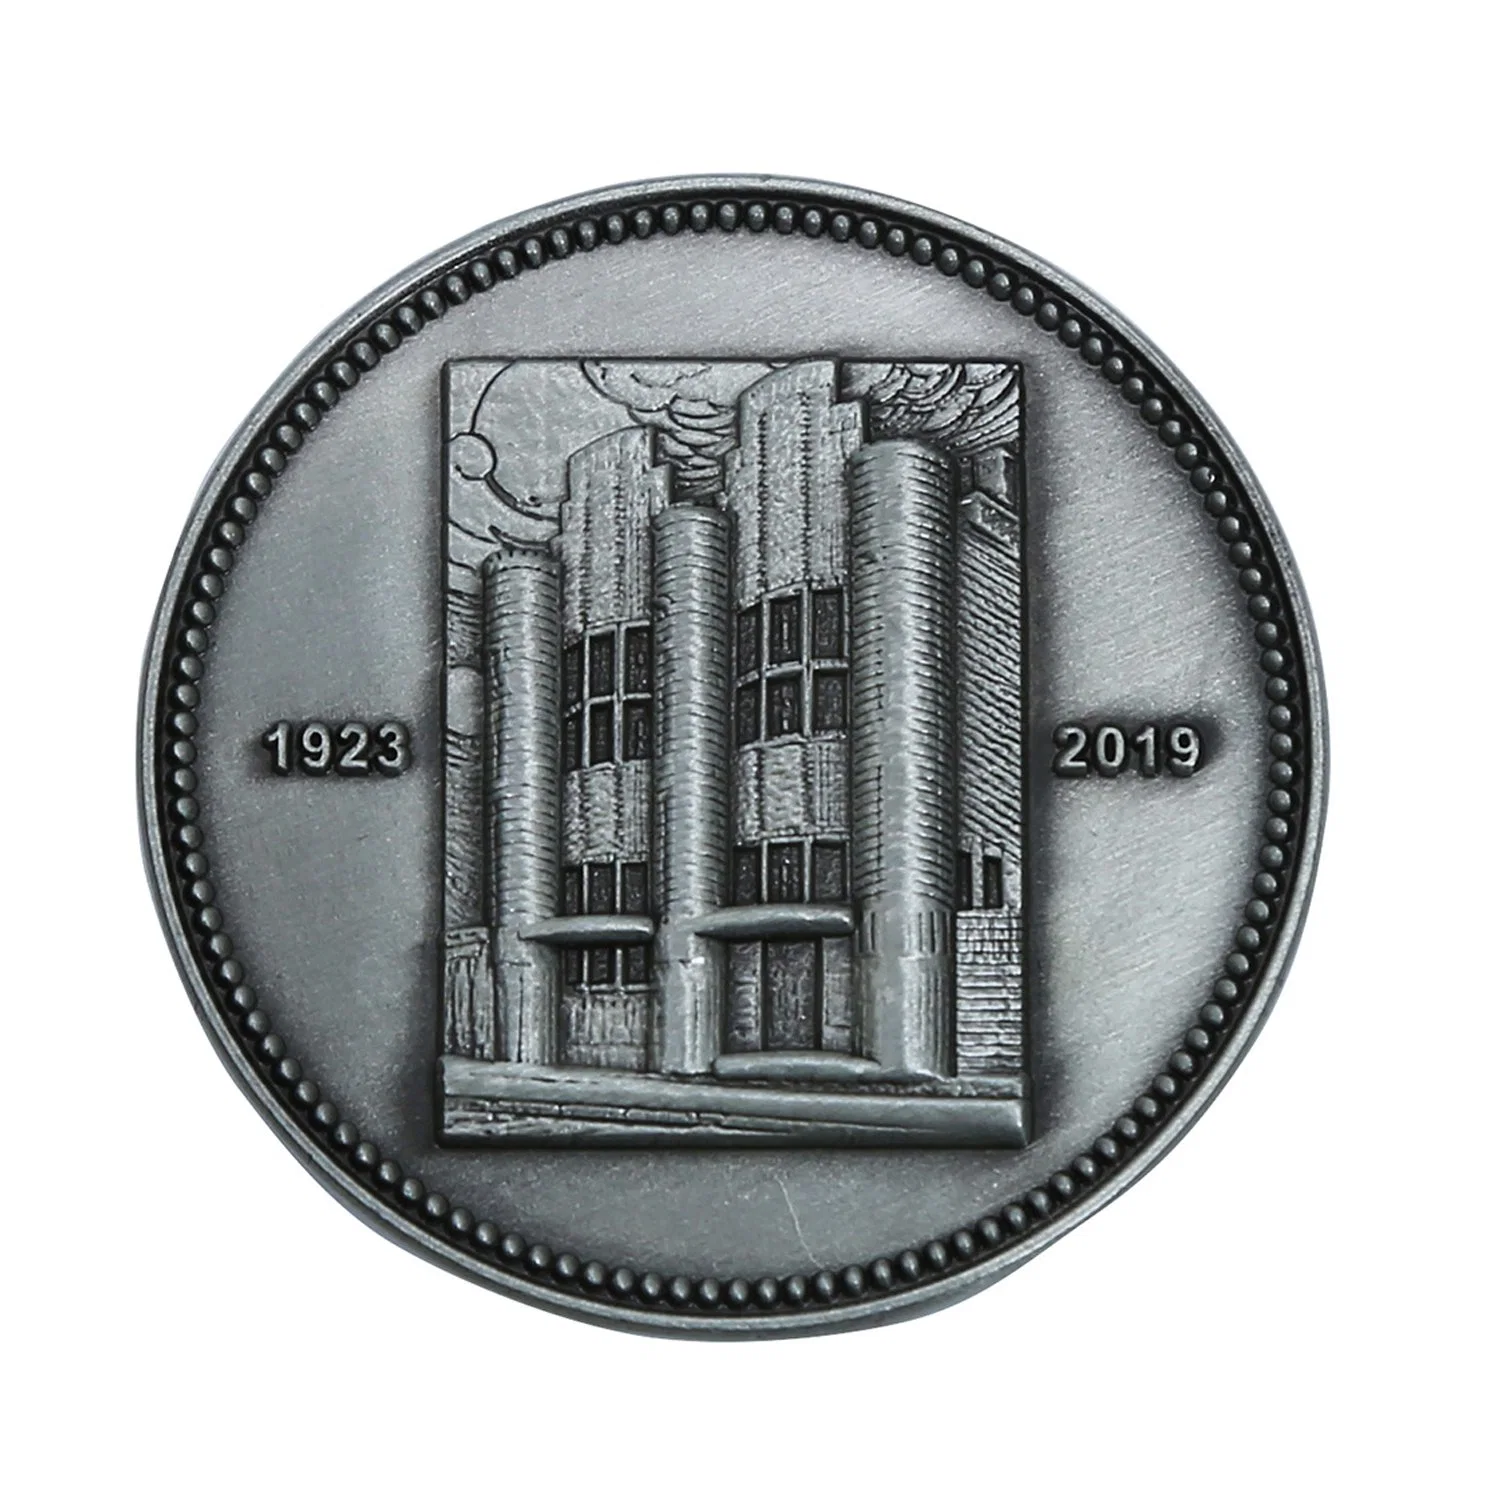 3D Promotion Coin Gift for Souvenir